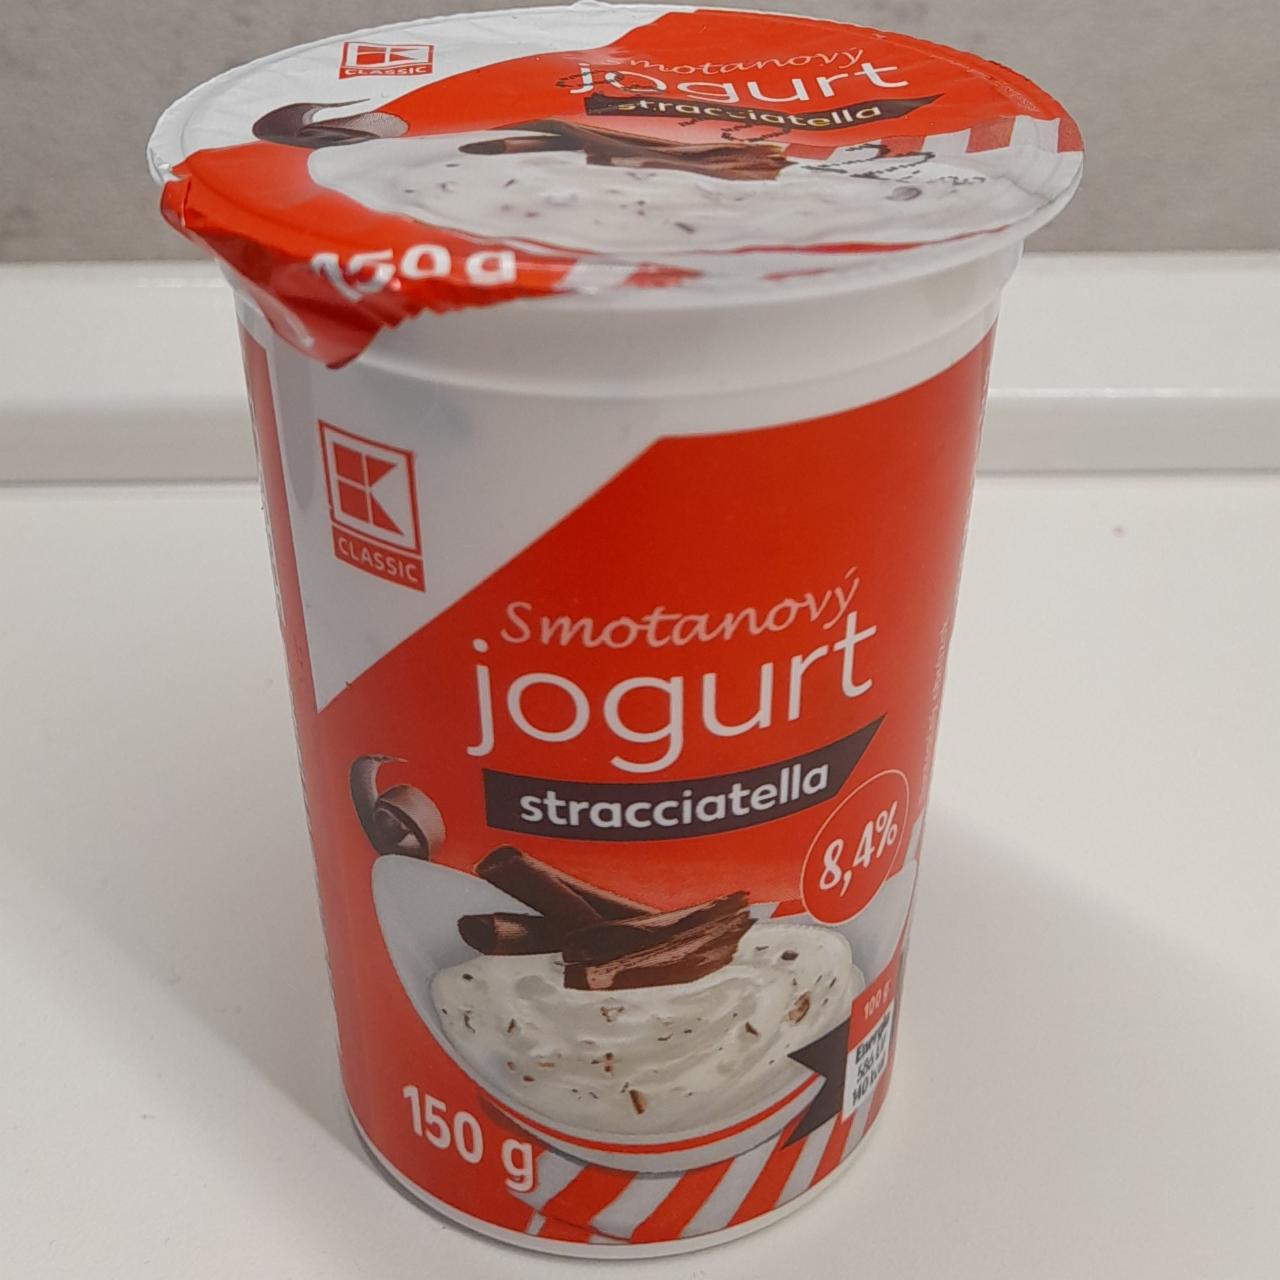 Fotografie - Smotanový jogurt stracciatella 8,4% K-Classic